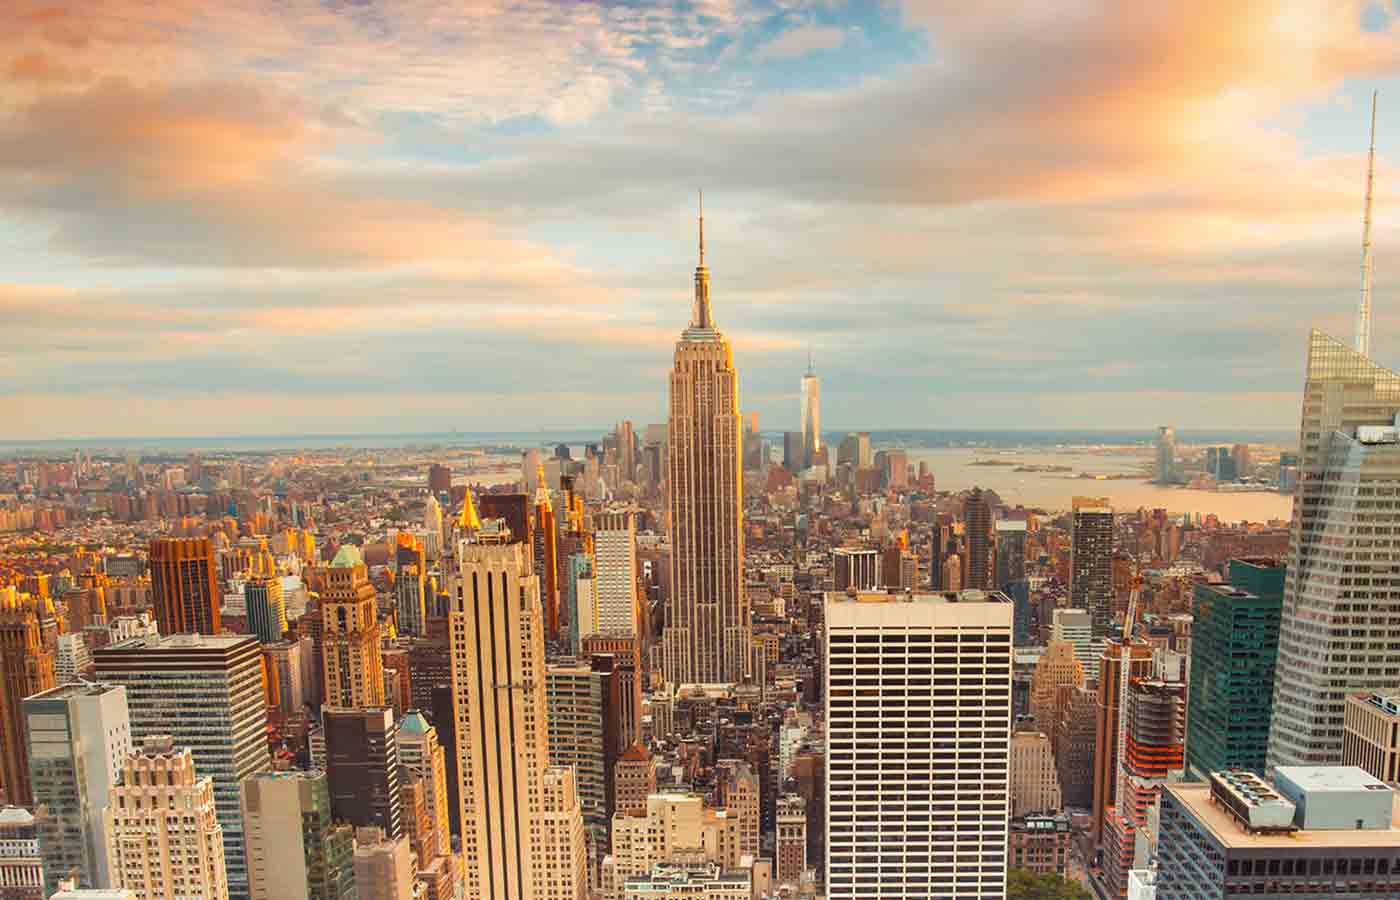 New York City skyline - Strata Data Conference 2018